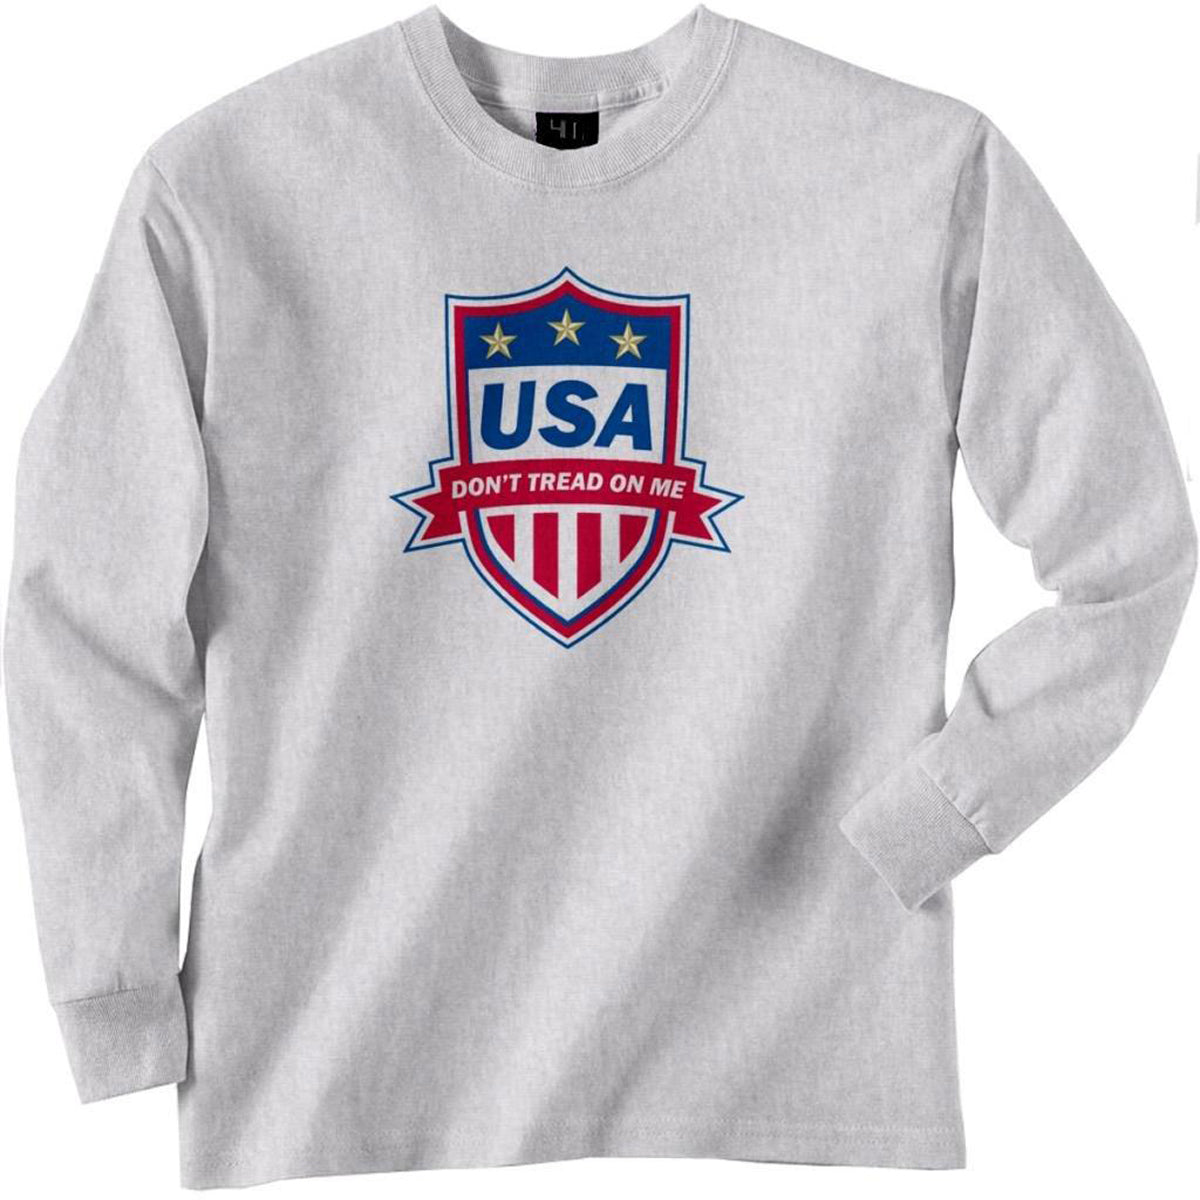 USA Don't Tread on Me Soccer Badge Printed Long Sleeve Tee T-shirts 411 Youth Medium Ash 